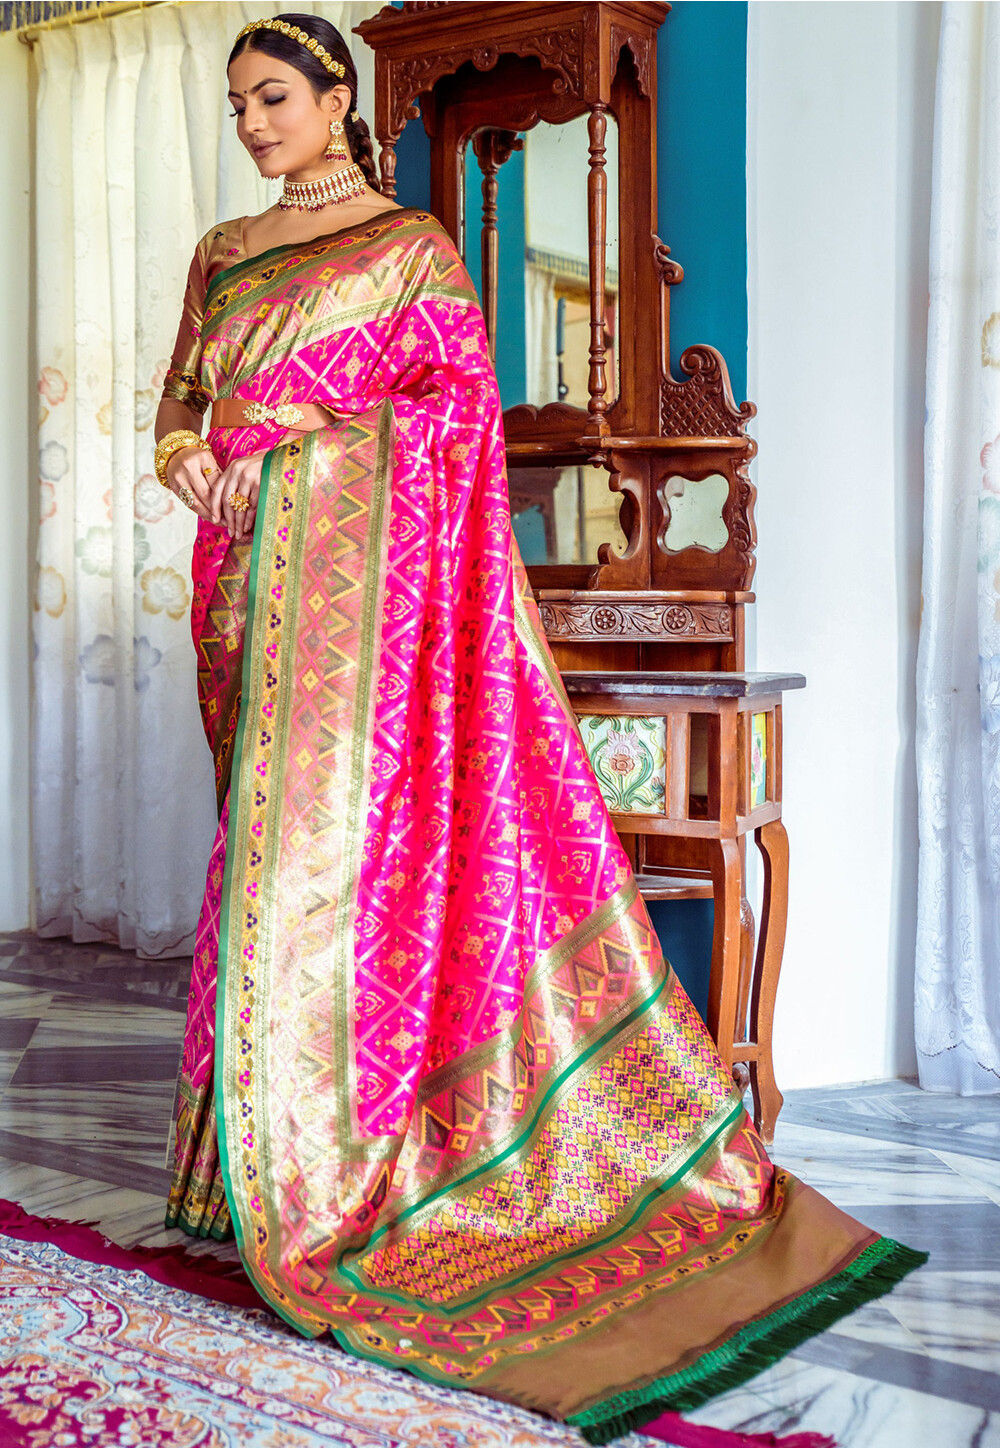 Low Waist Saree Draping | Inspired from Alia Bhatt | Saree wearing | Hanky  Tuck | Chiffon Saree - YouTube